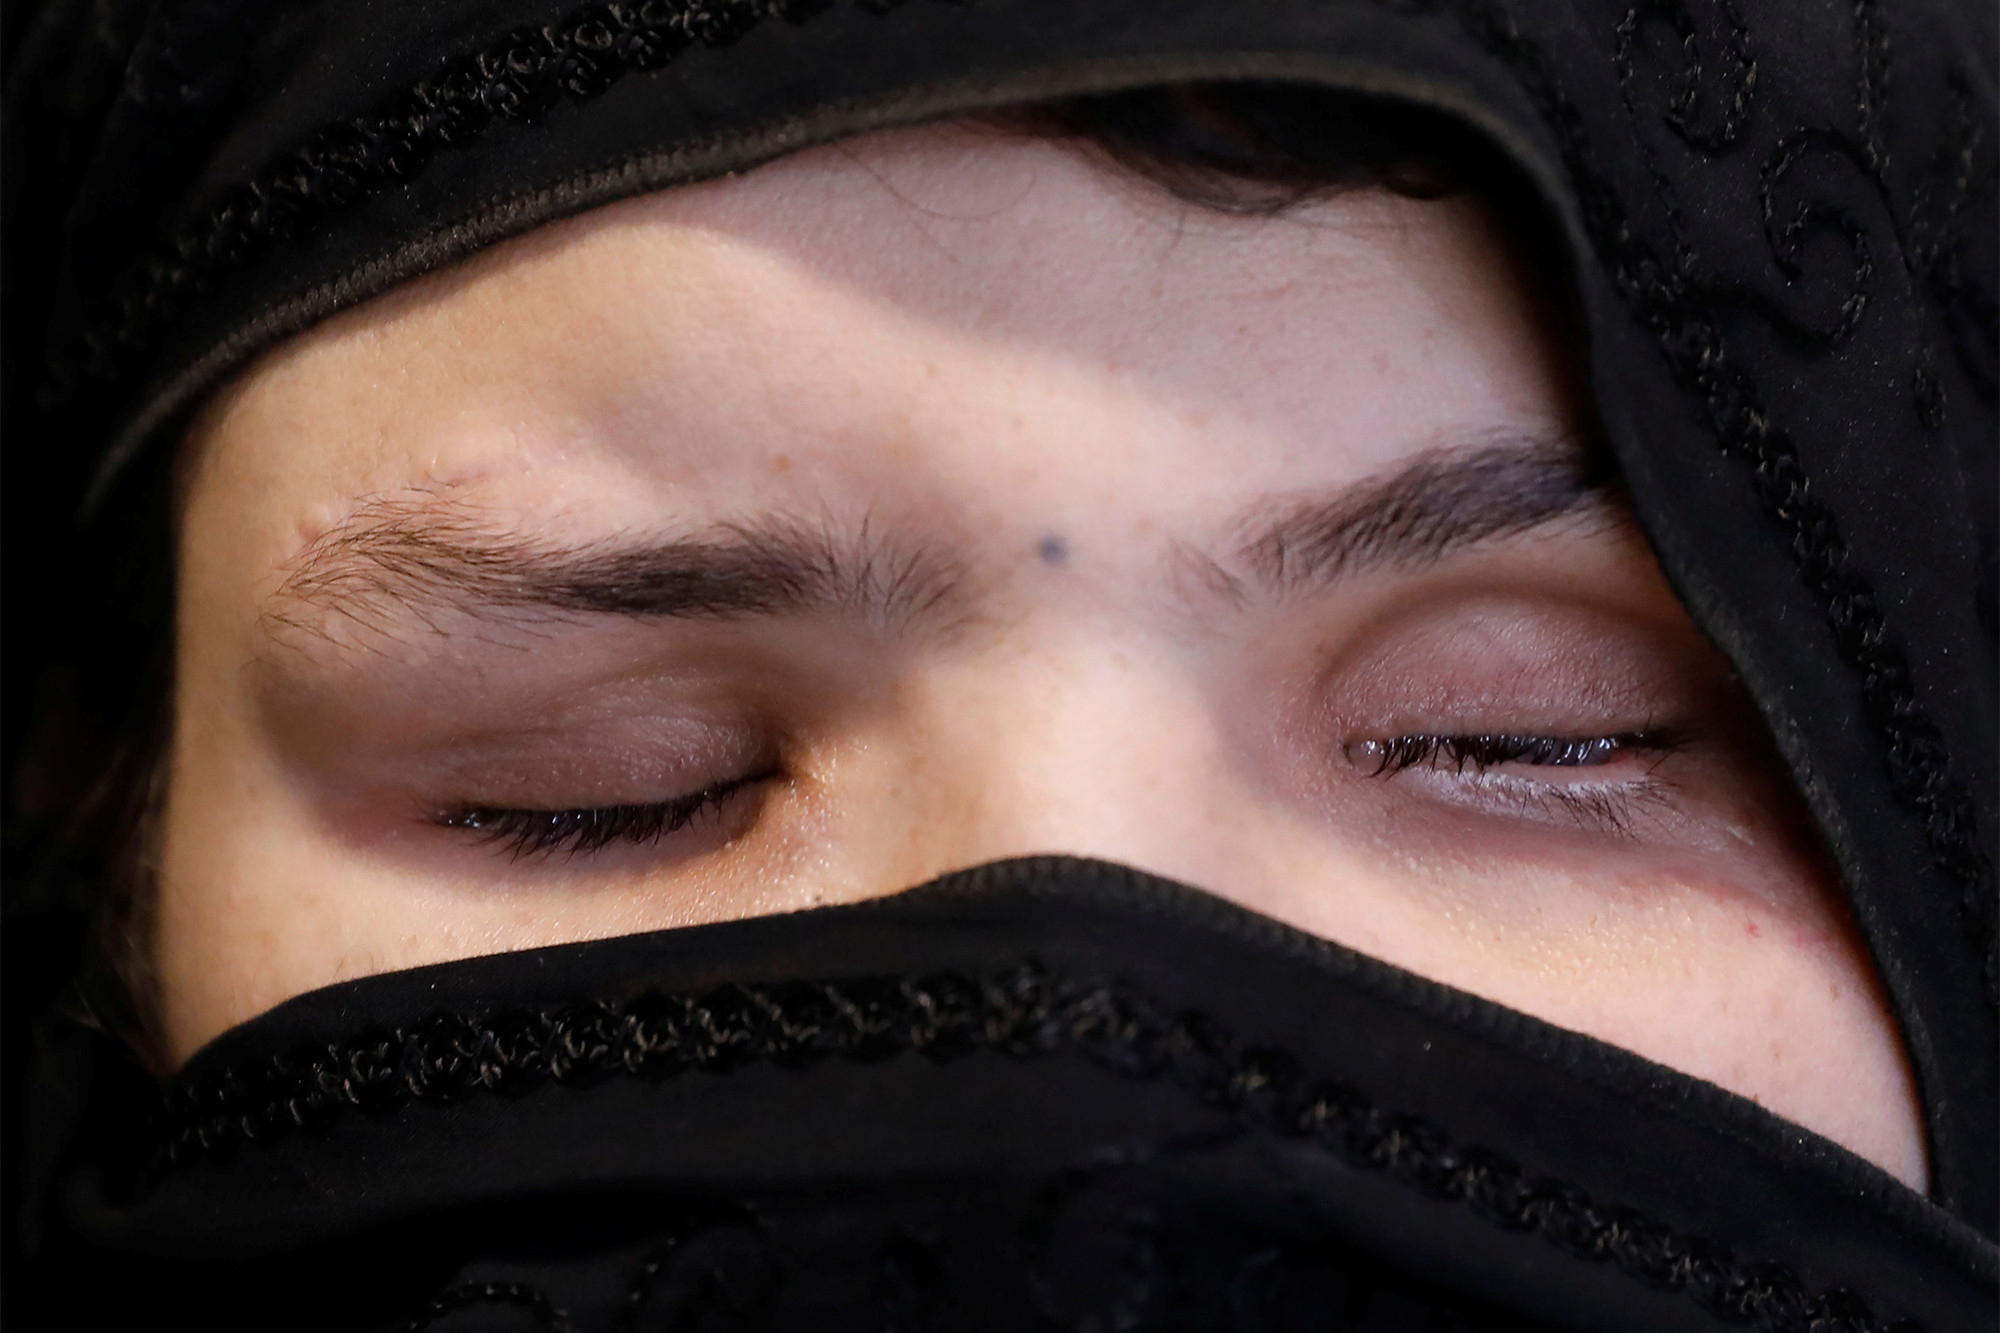 afghan mom blinded by taliban reveals harsh truths details